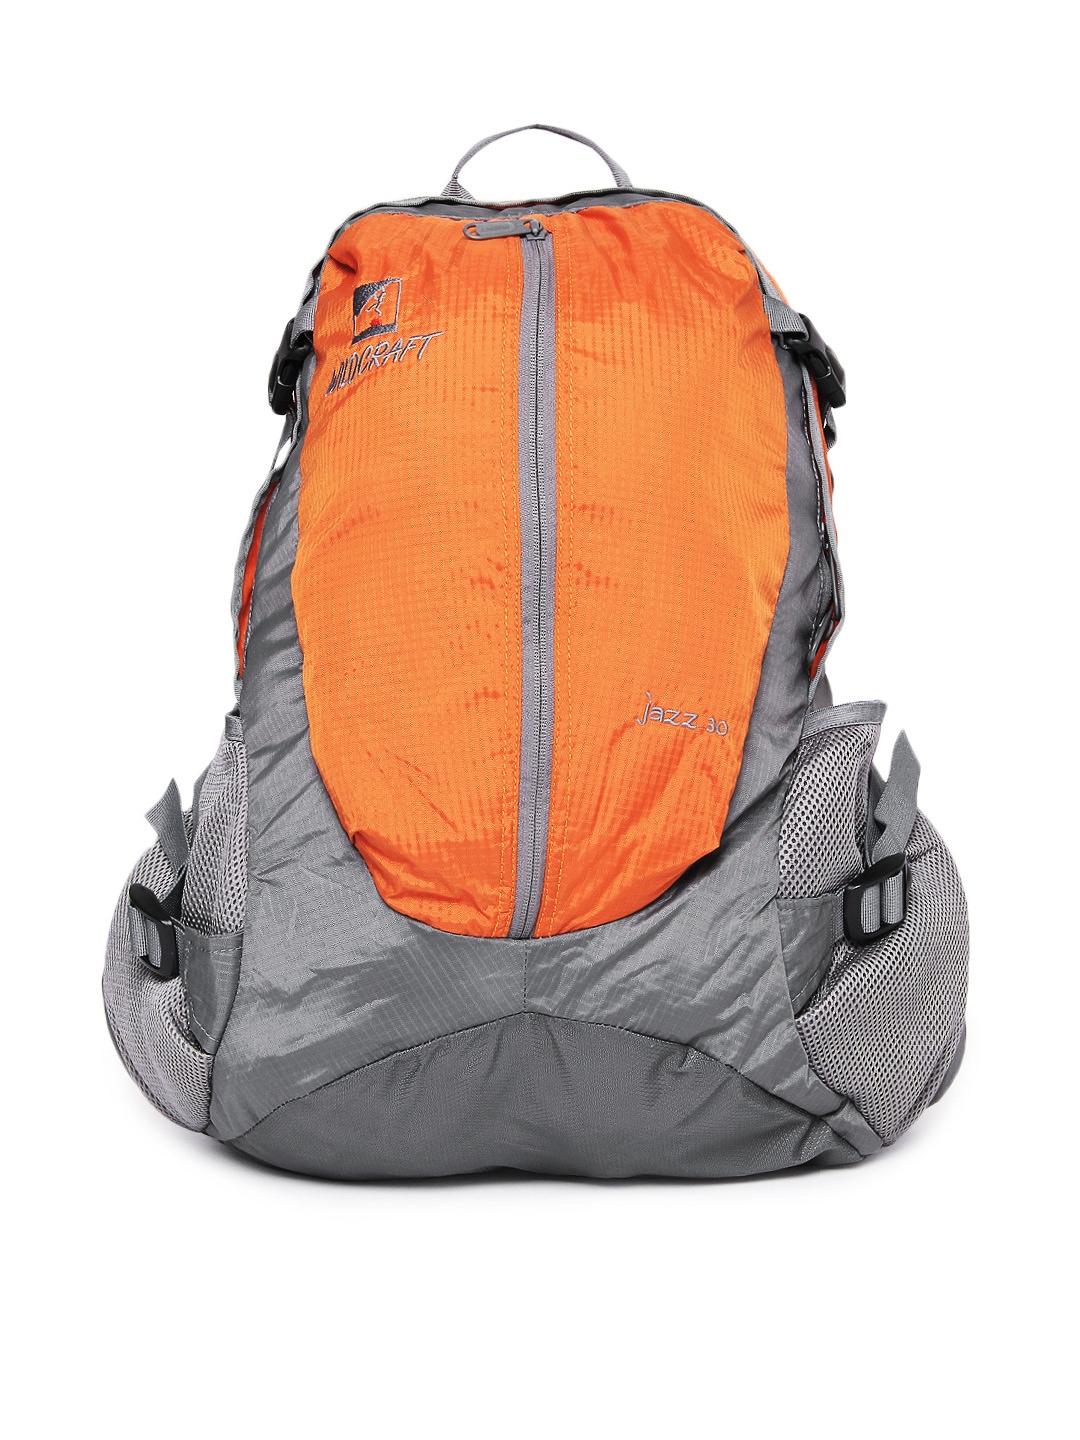 Wildcraft Unisex Orange & Grey Backpack